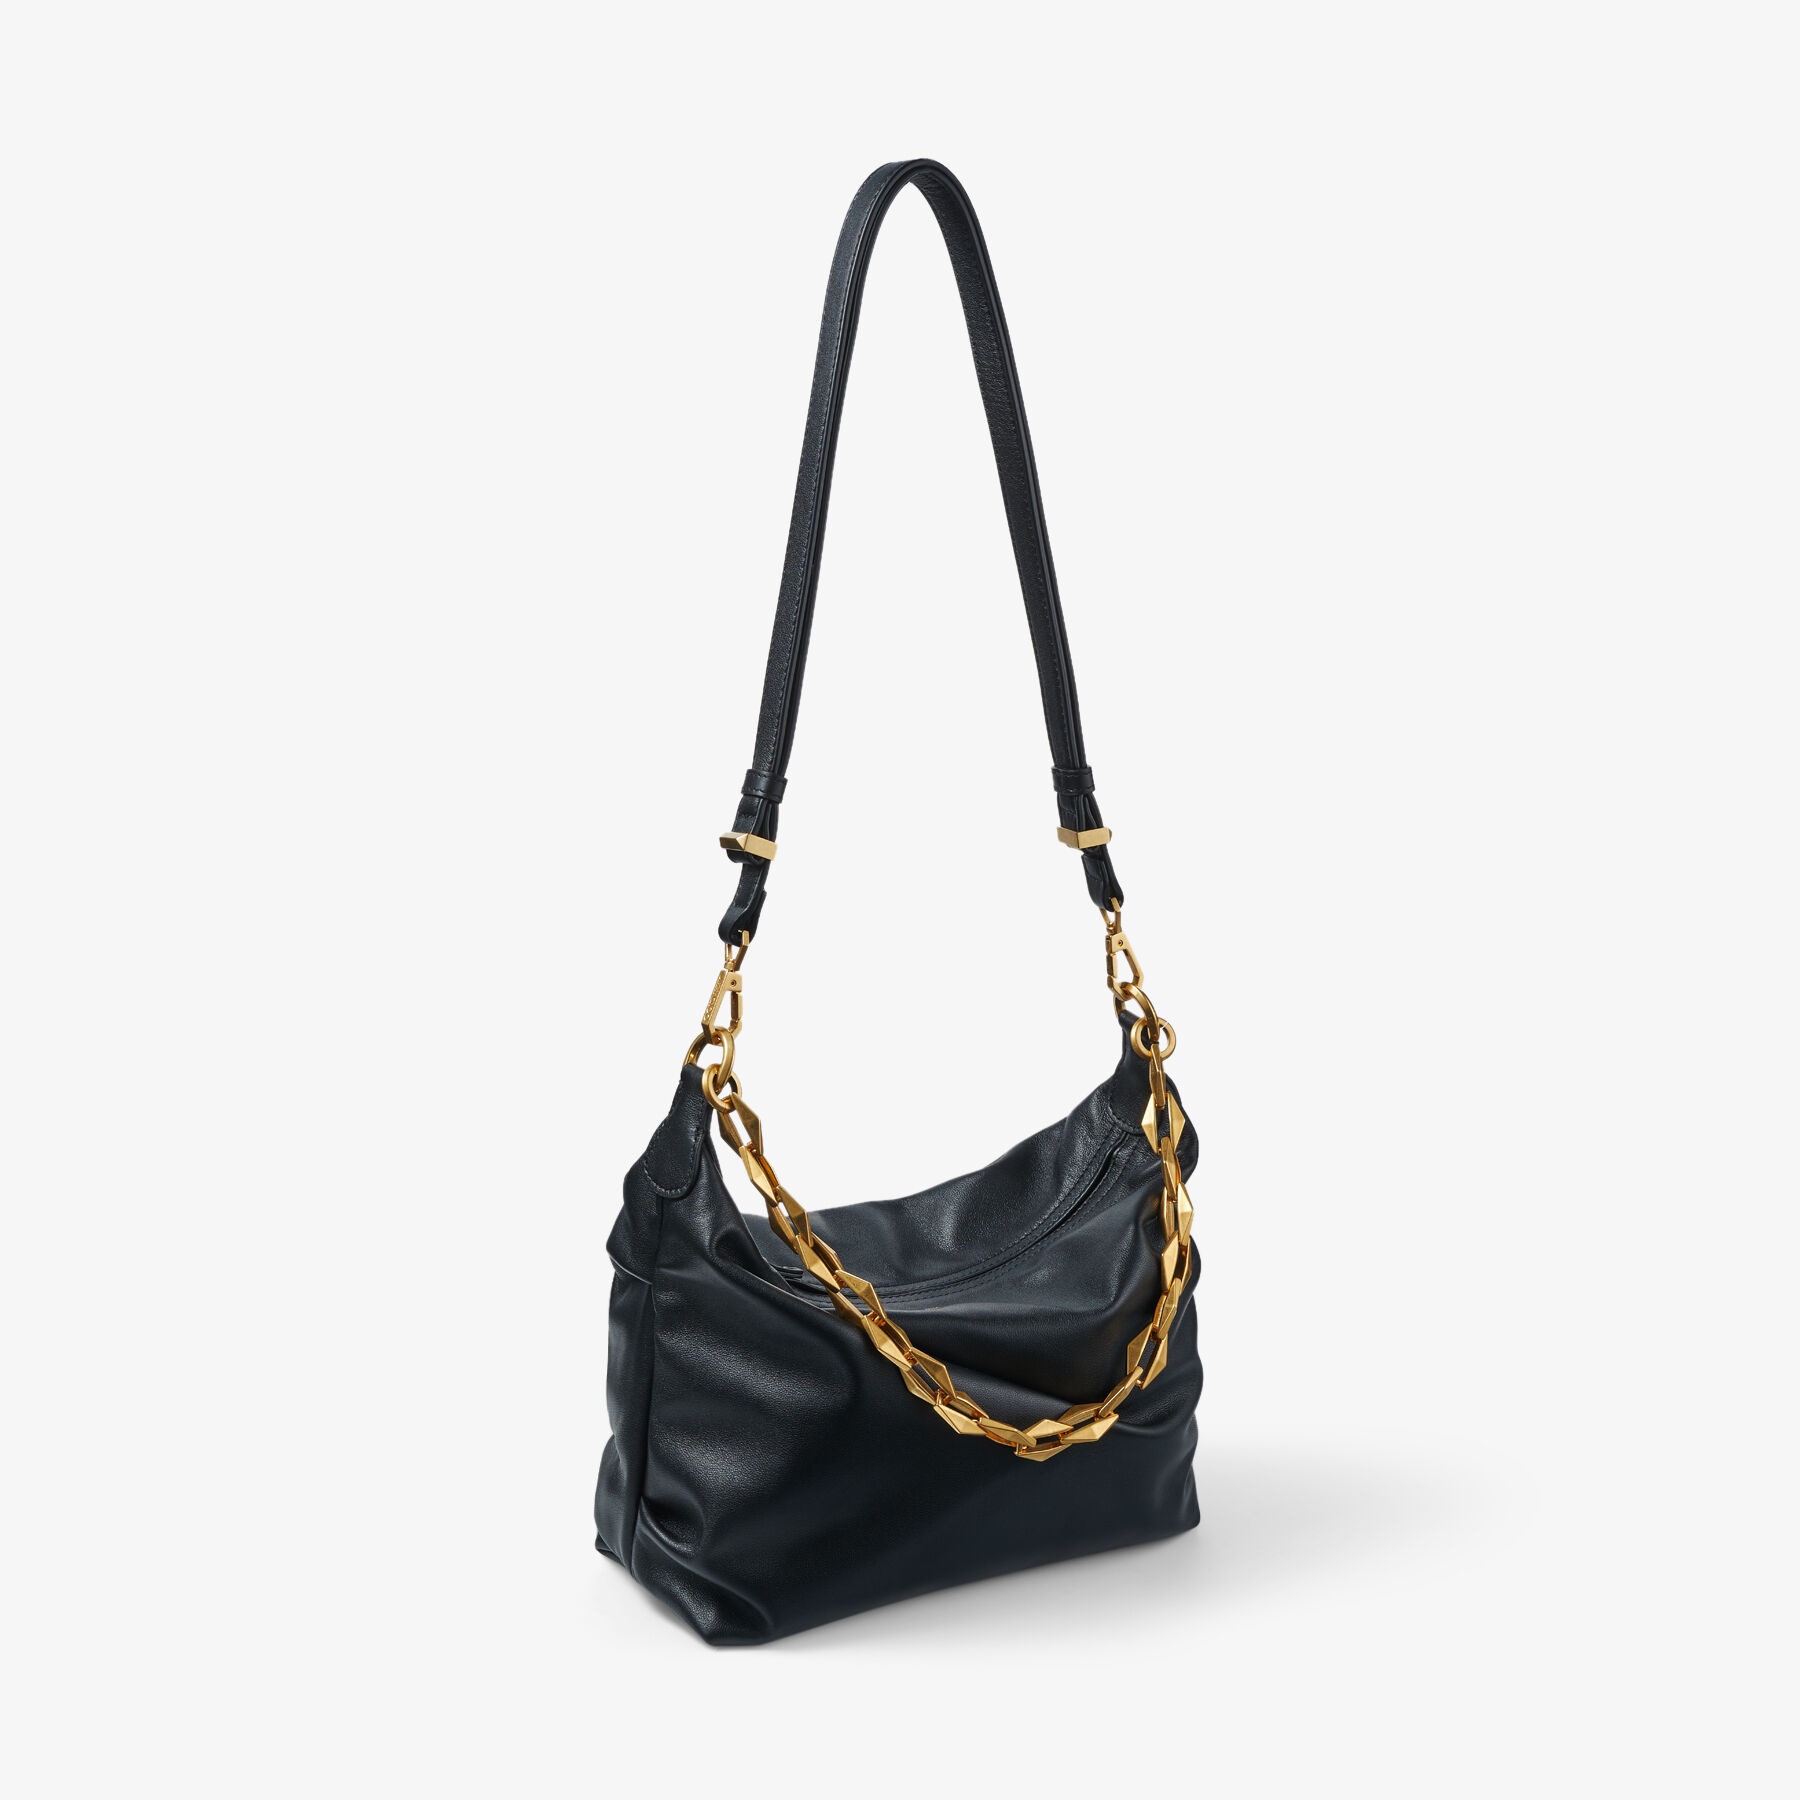 Diamond Soft Hobo S
Black Soft Calf Leather Hobo Bag with Chain Strap - 9